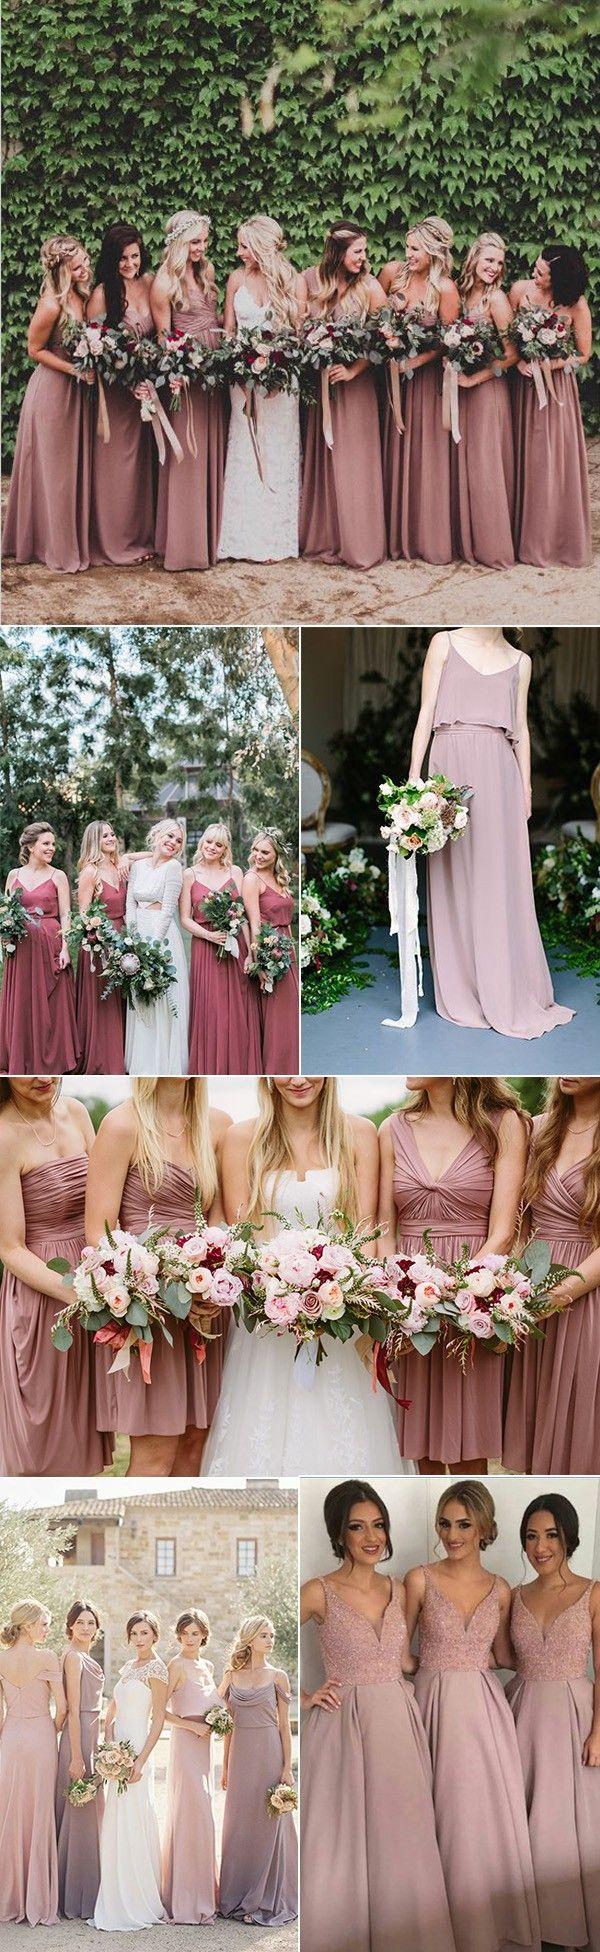 Hochzeit - Trending-24 Dusty Rose Wedding Color Ideas For 2017